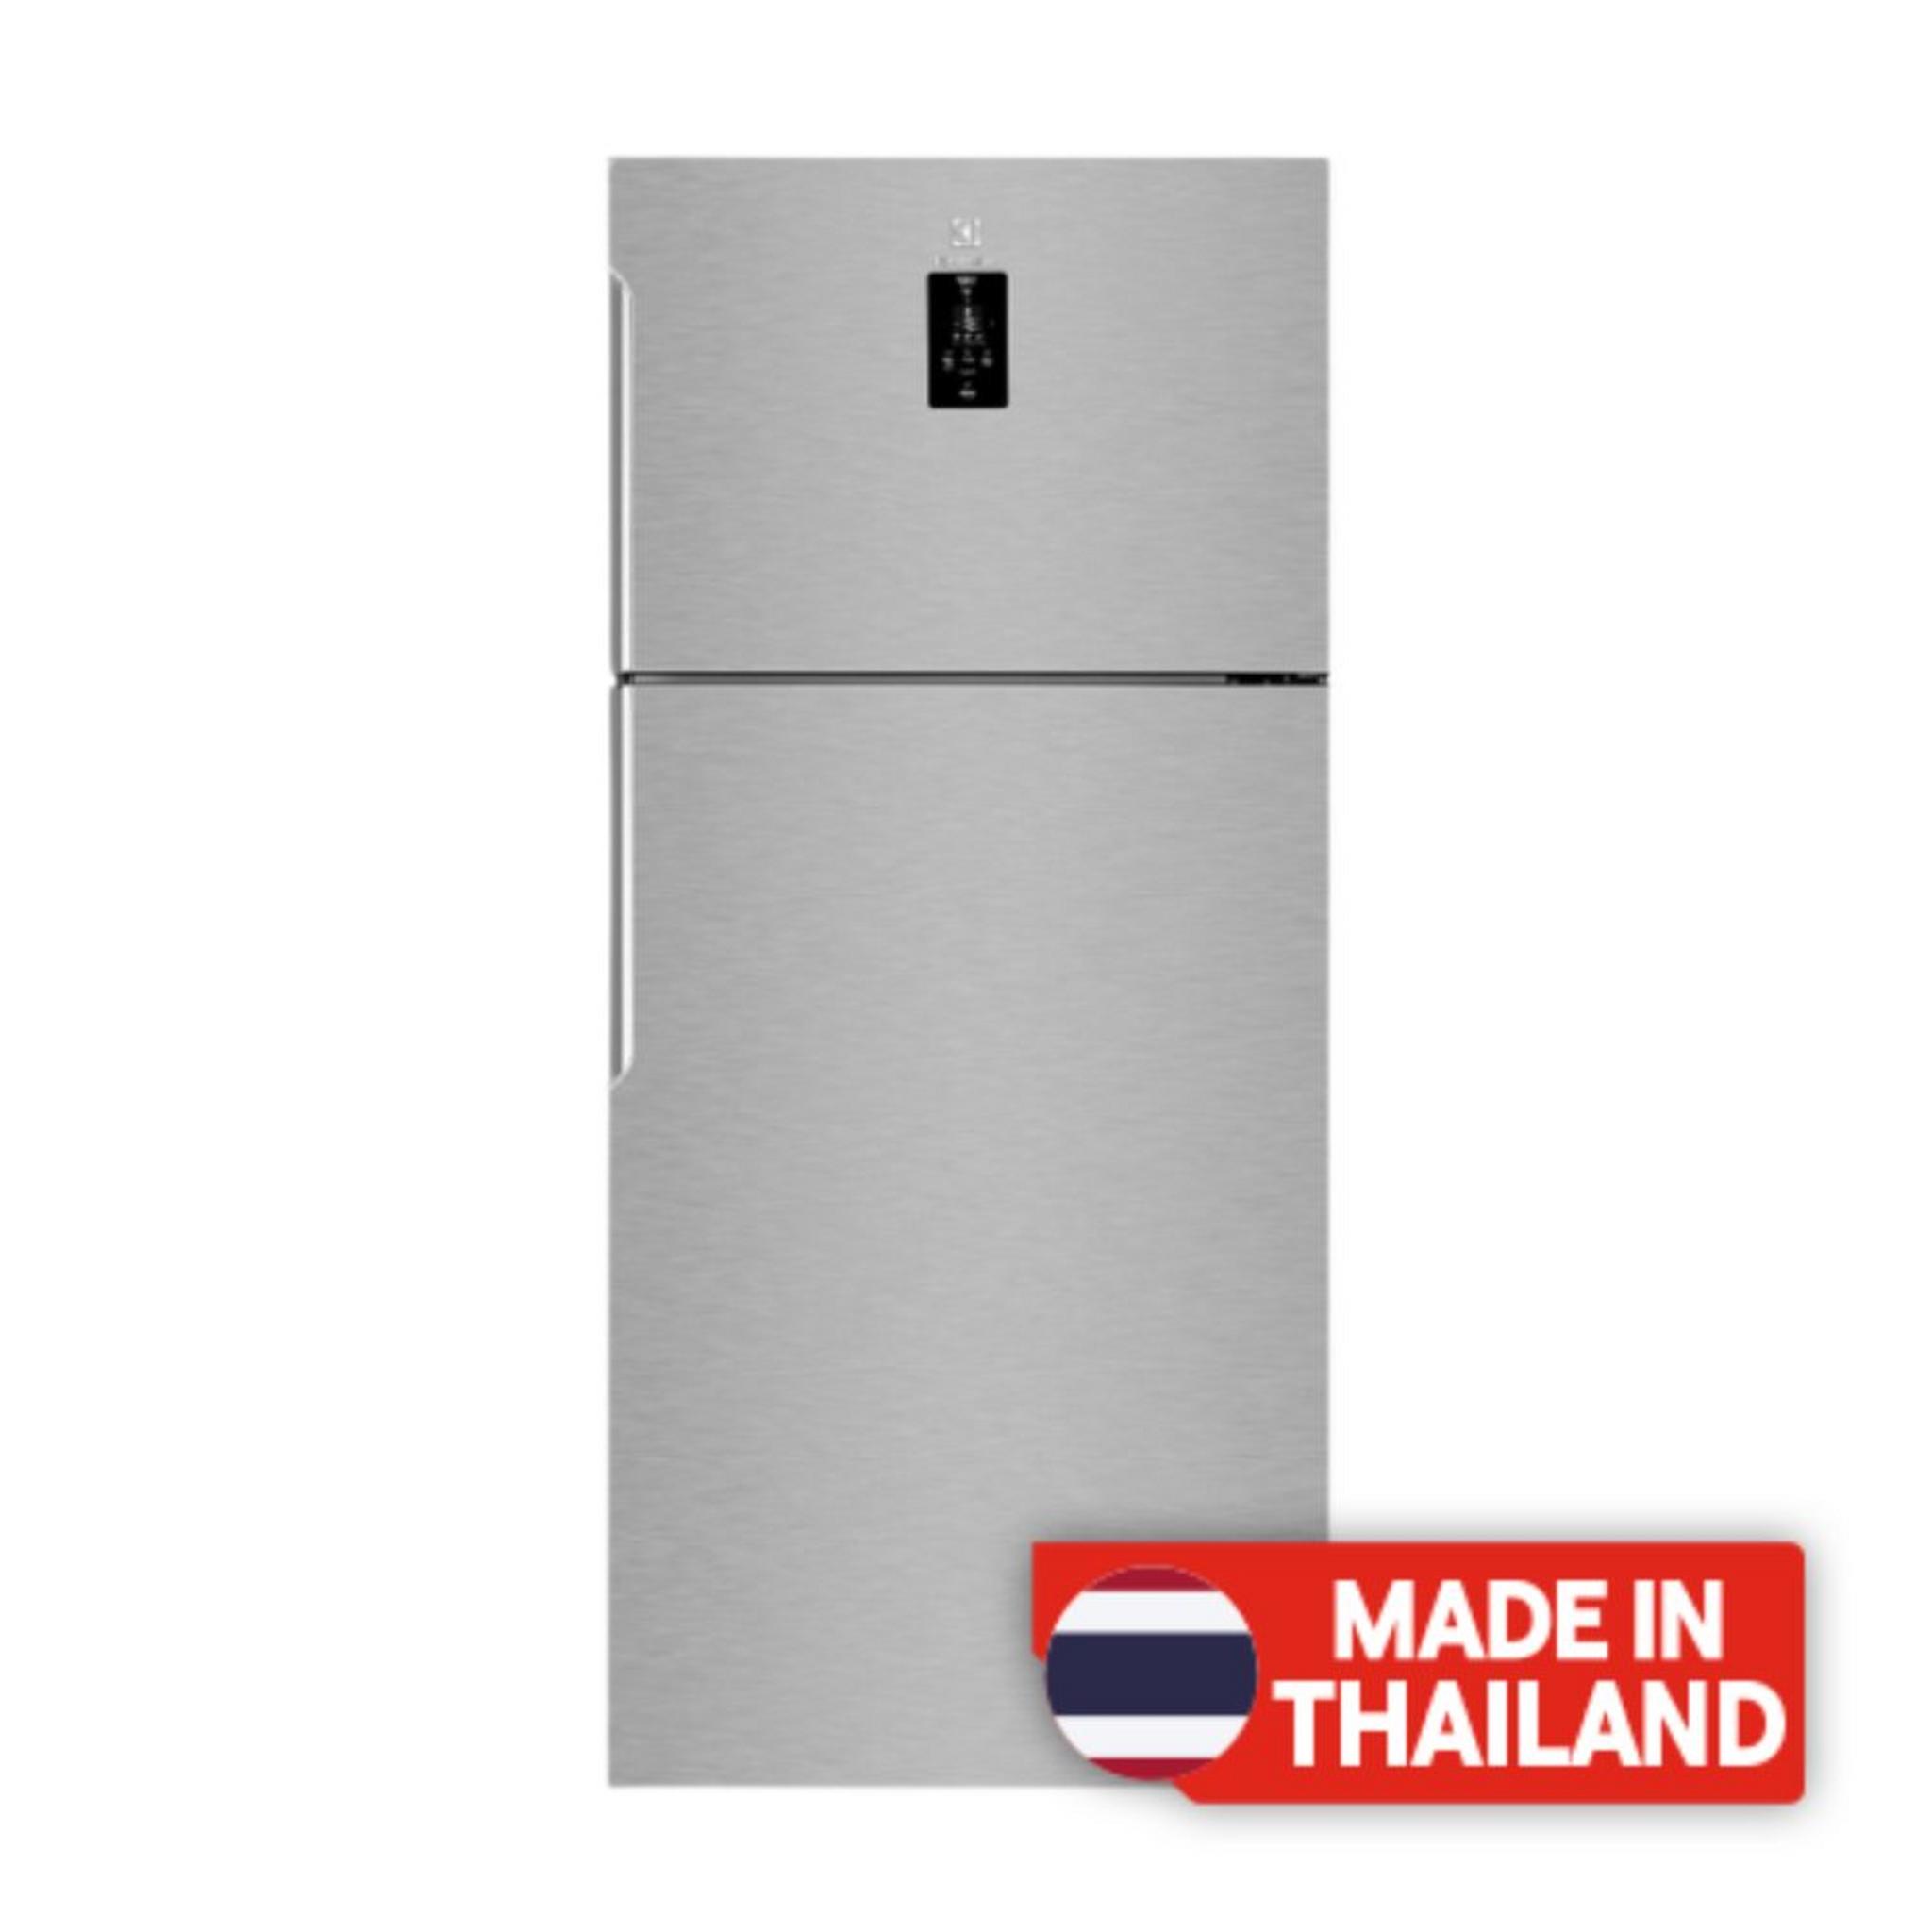 Electrolux Top Mount Refrigerator 20 CFT (EMT86910X) - Inox